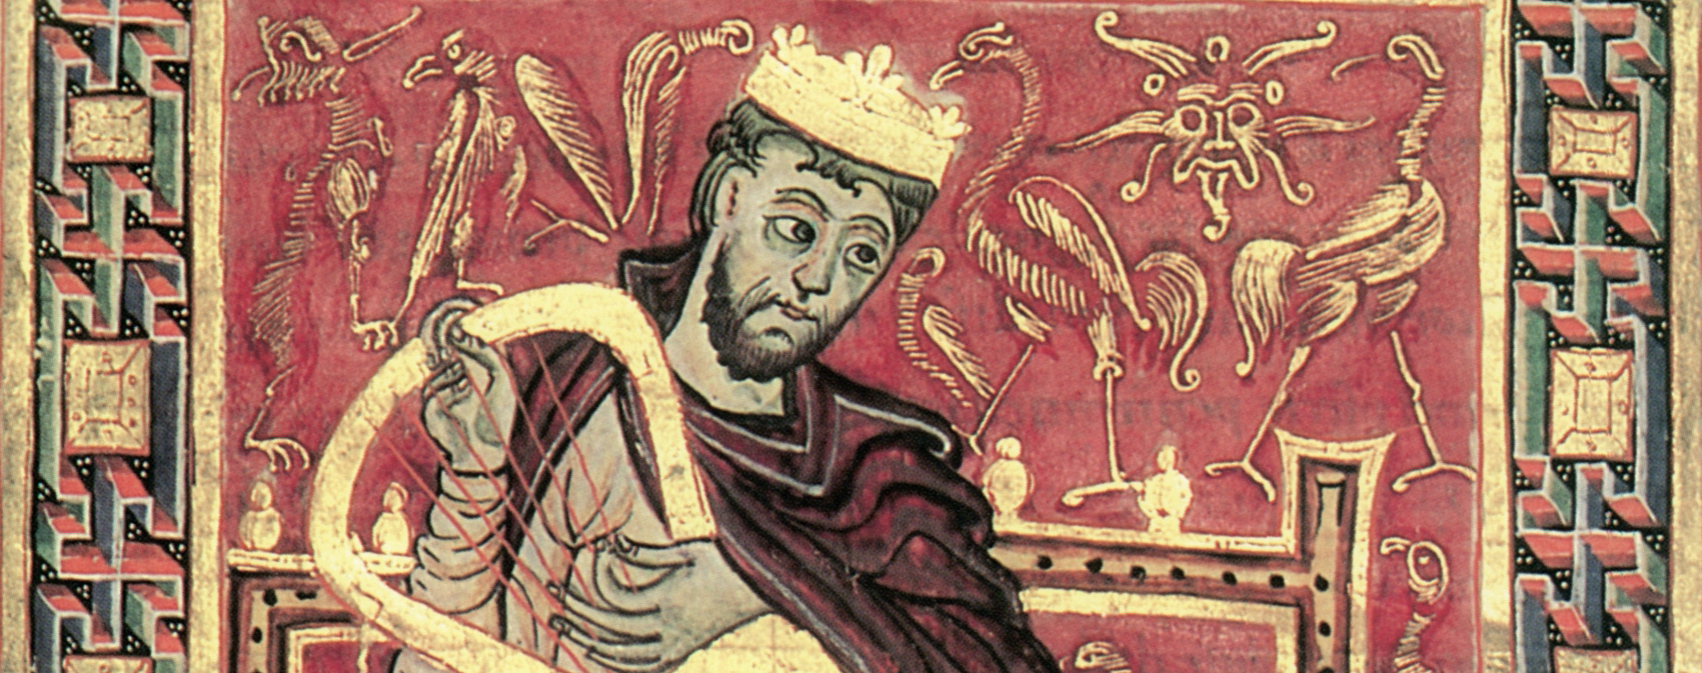 David entronizado toca el arpa, Salterio de Egbert, c. 977-993, fol. 20v.